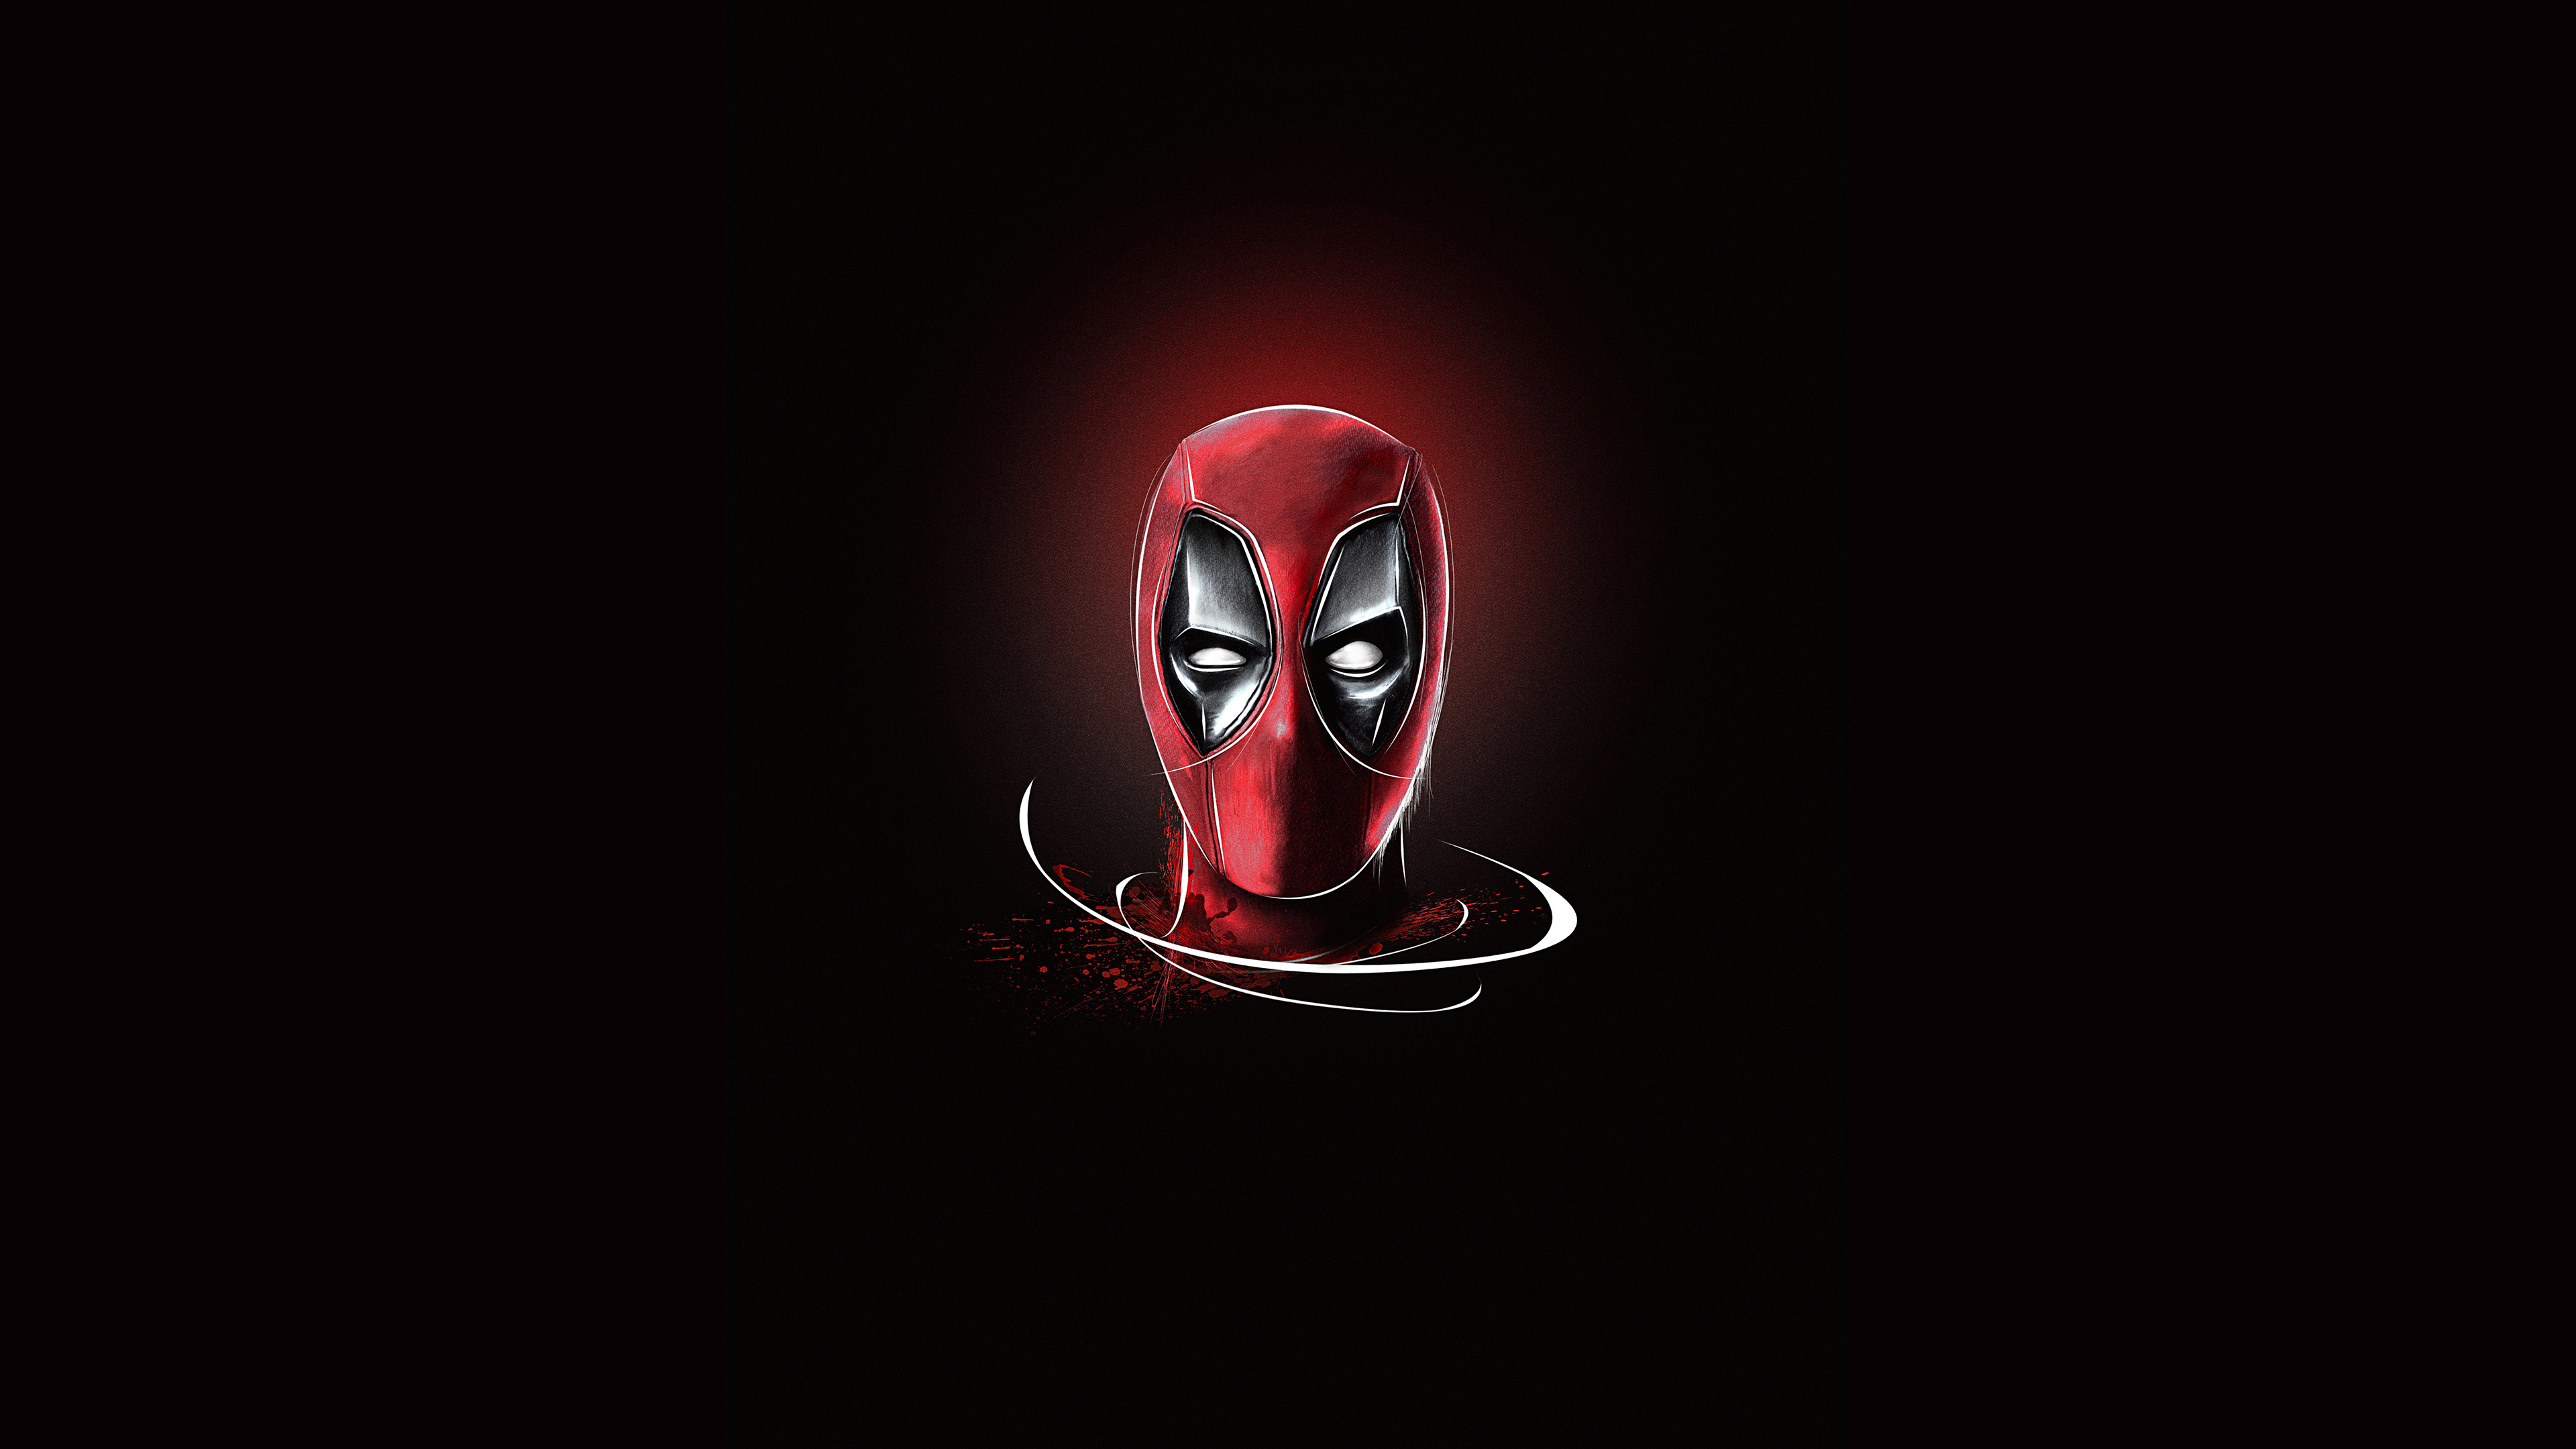  Deadpool  Minimal Art 4k  HD  Superheroes 4k  Wallpapers  